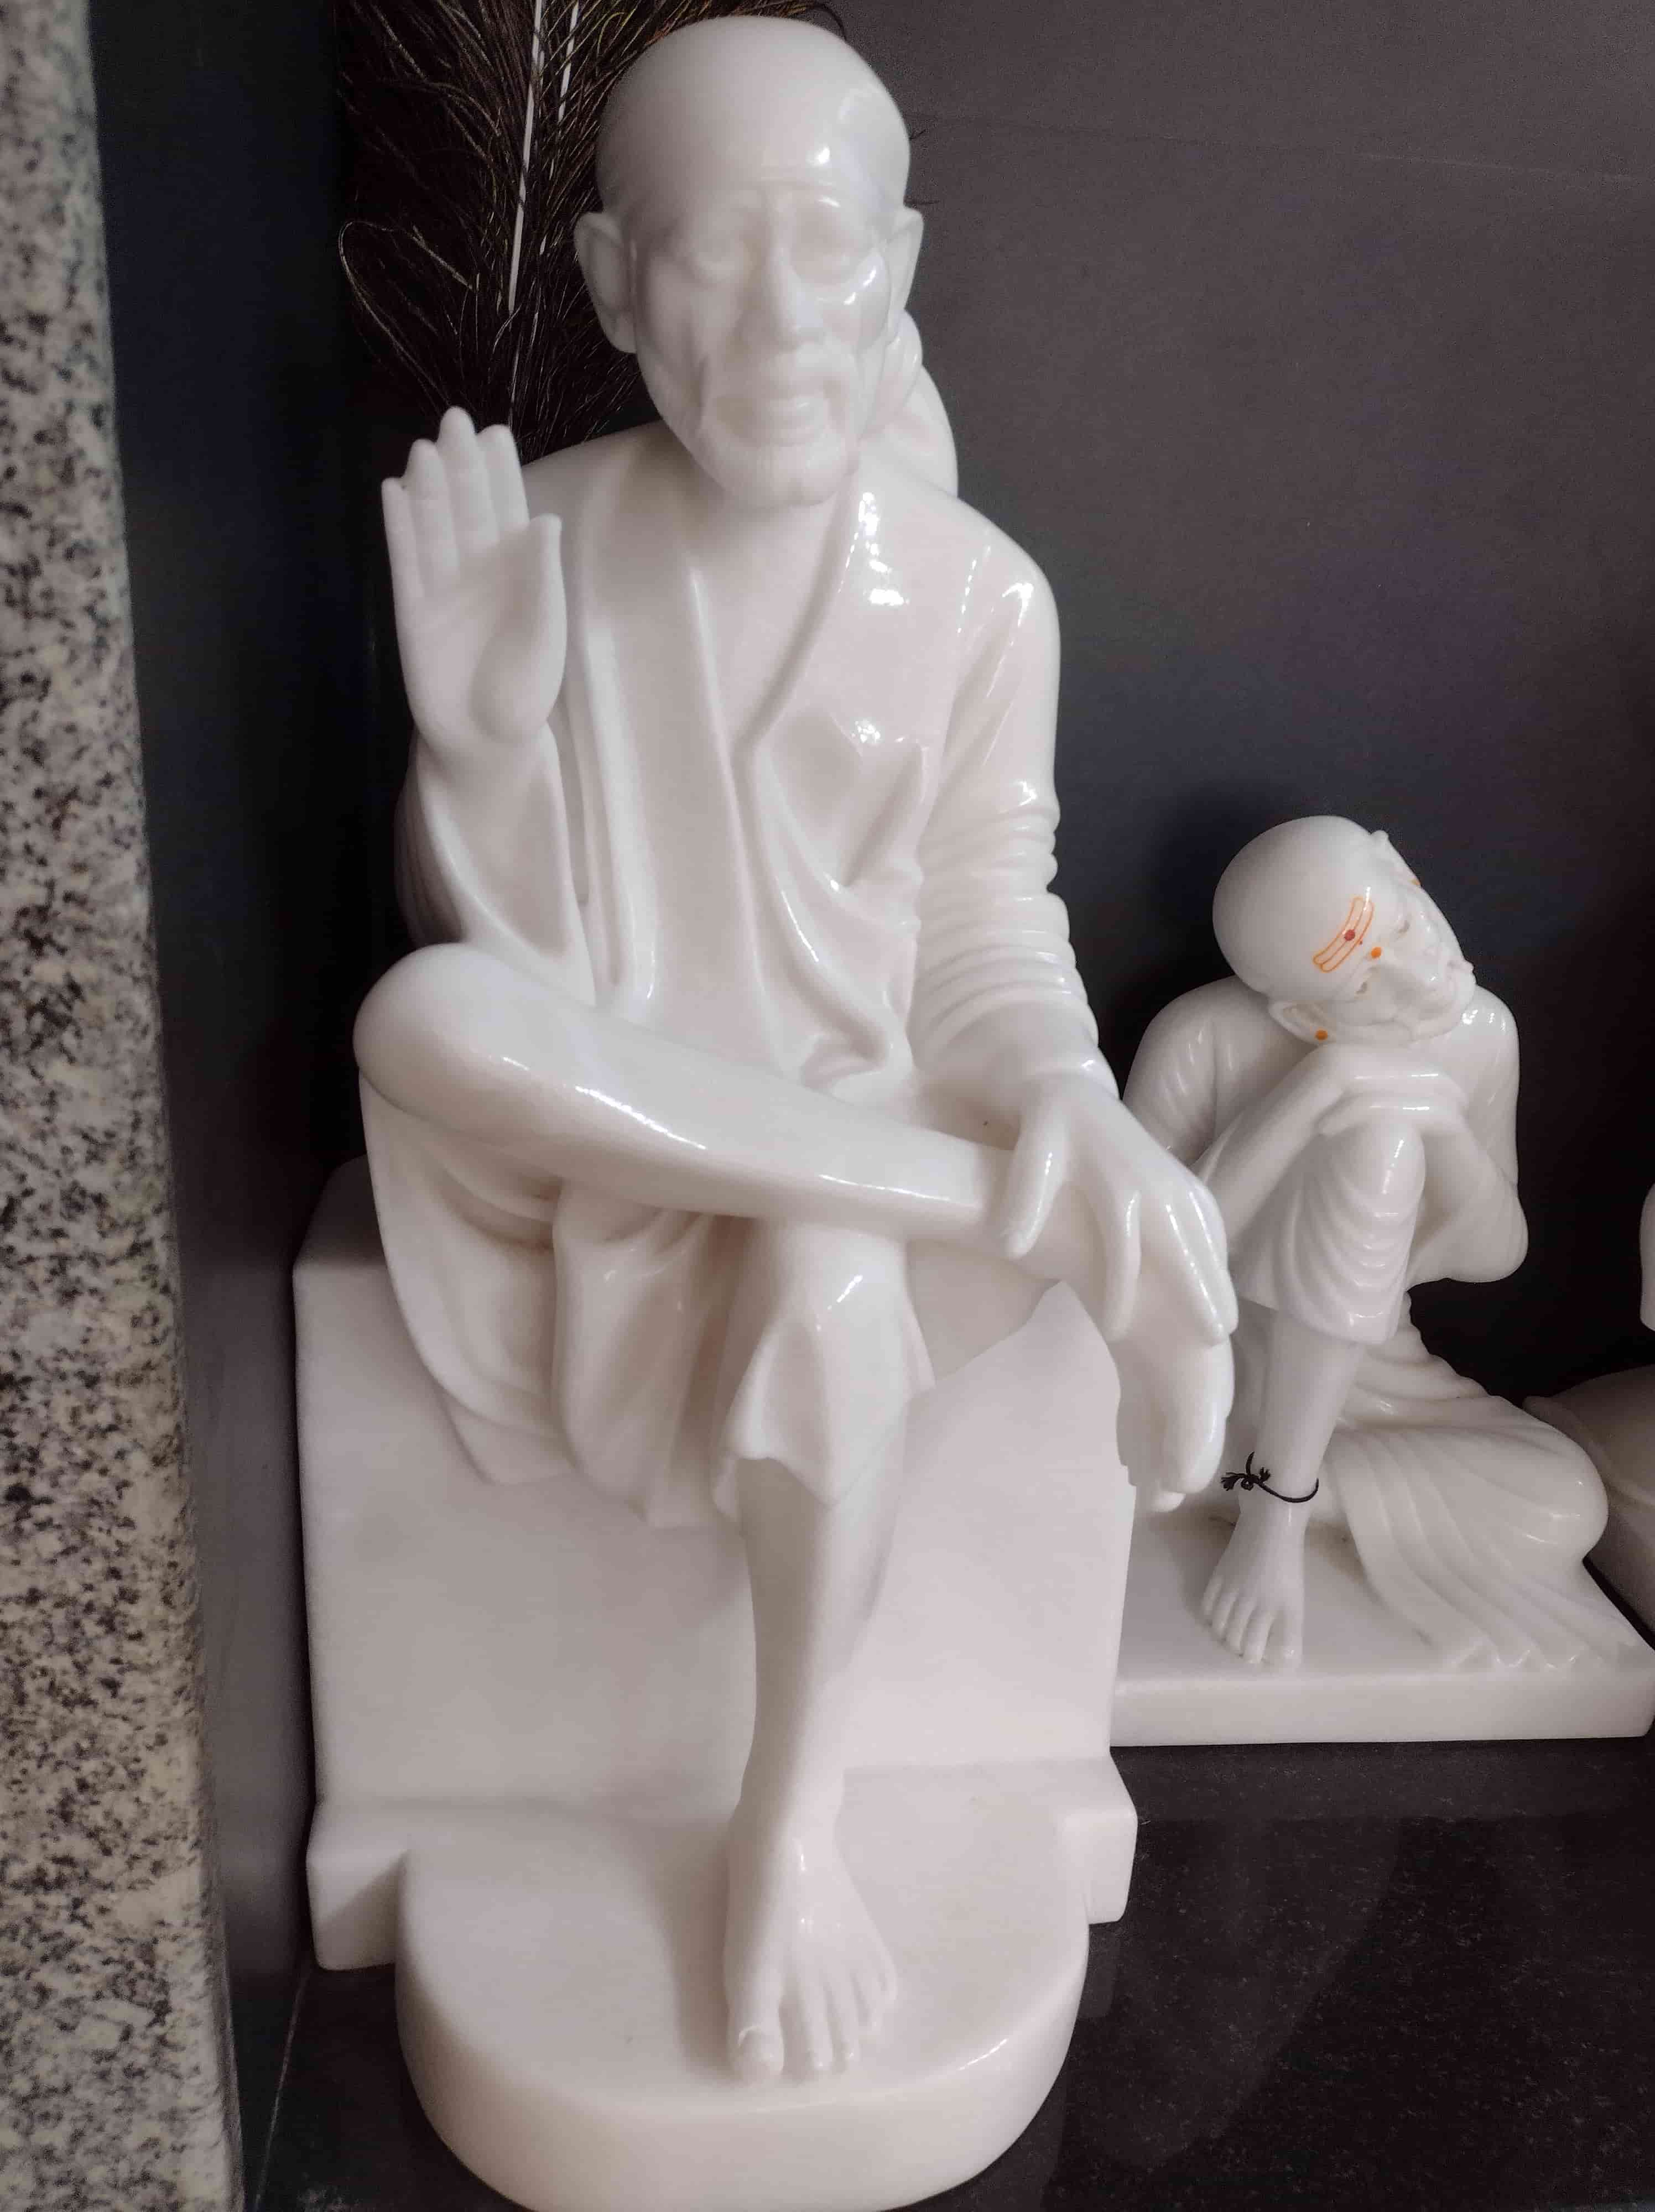 Sai Baba Marble Statue